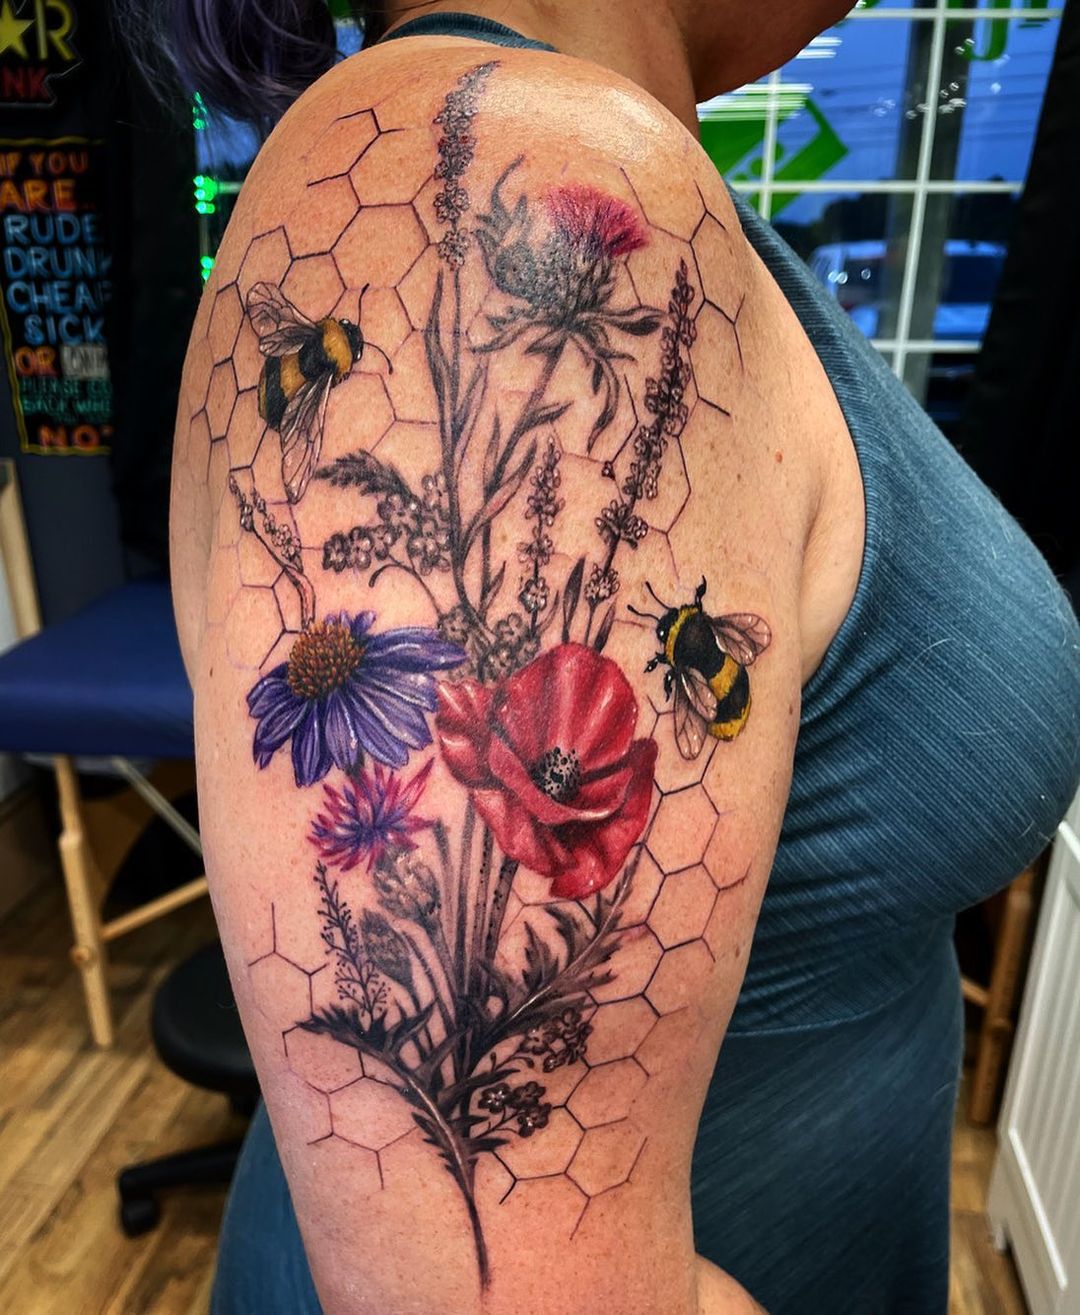 Tatuaje múltiple de abejas